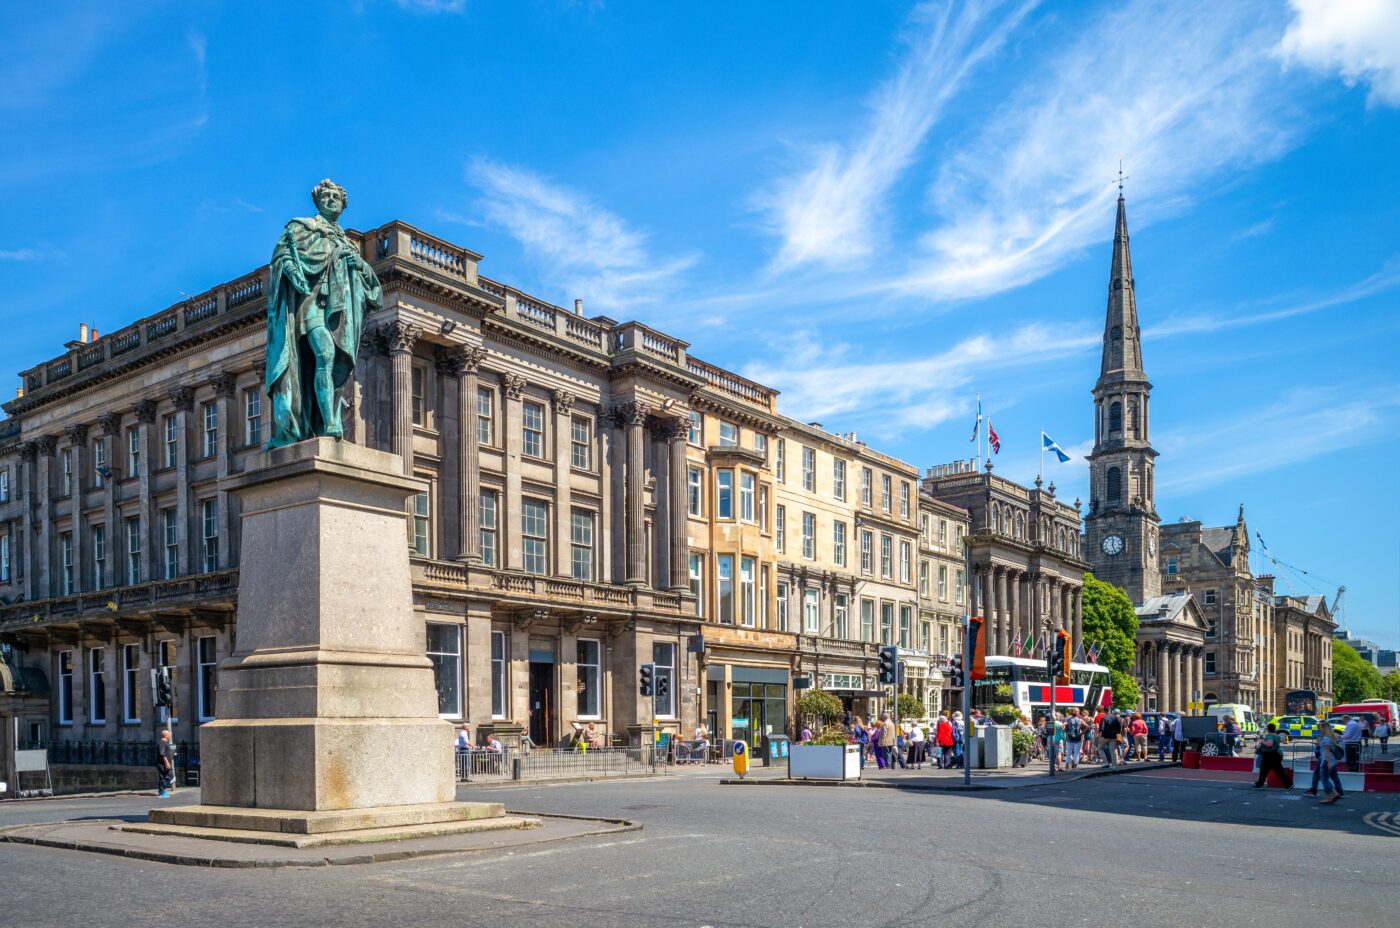 View of George street at Edinburgh, Scotland